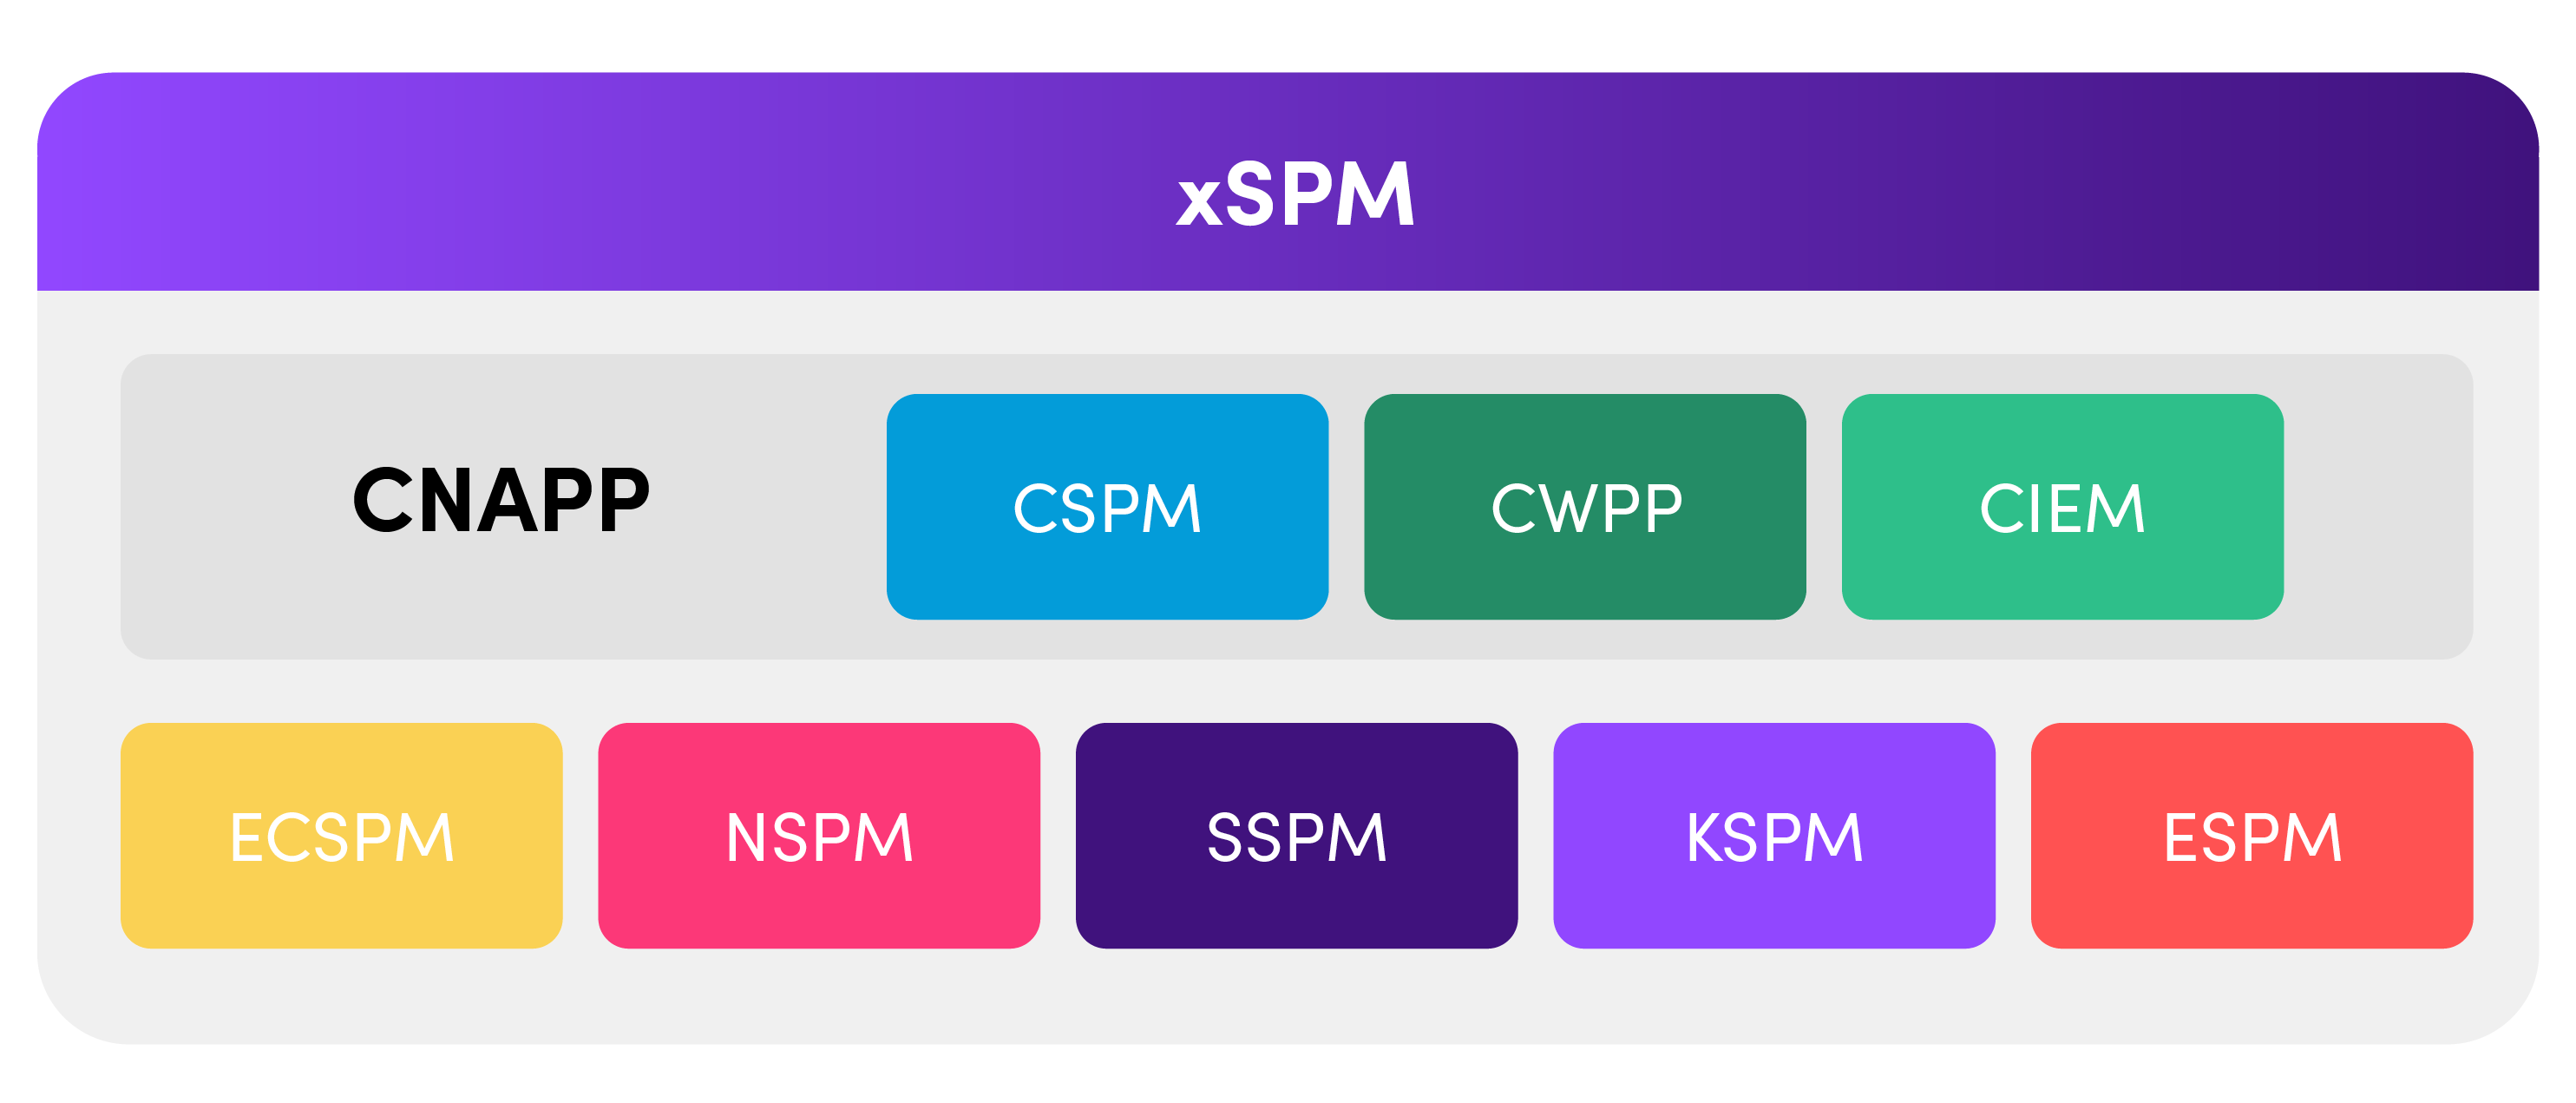 xSPM components